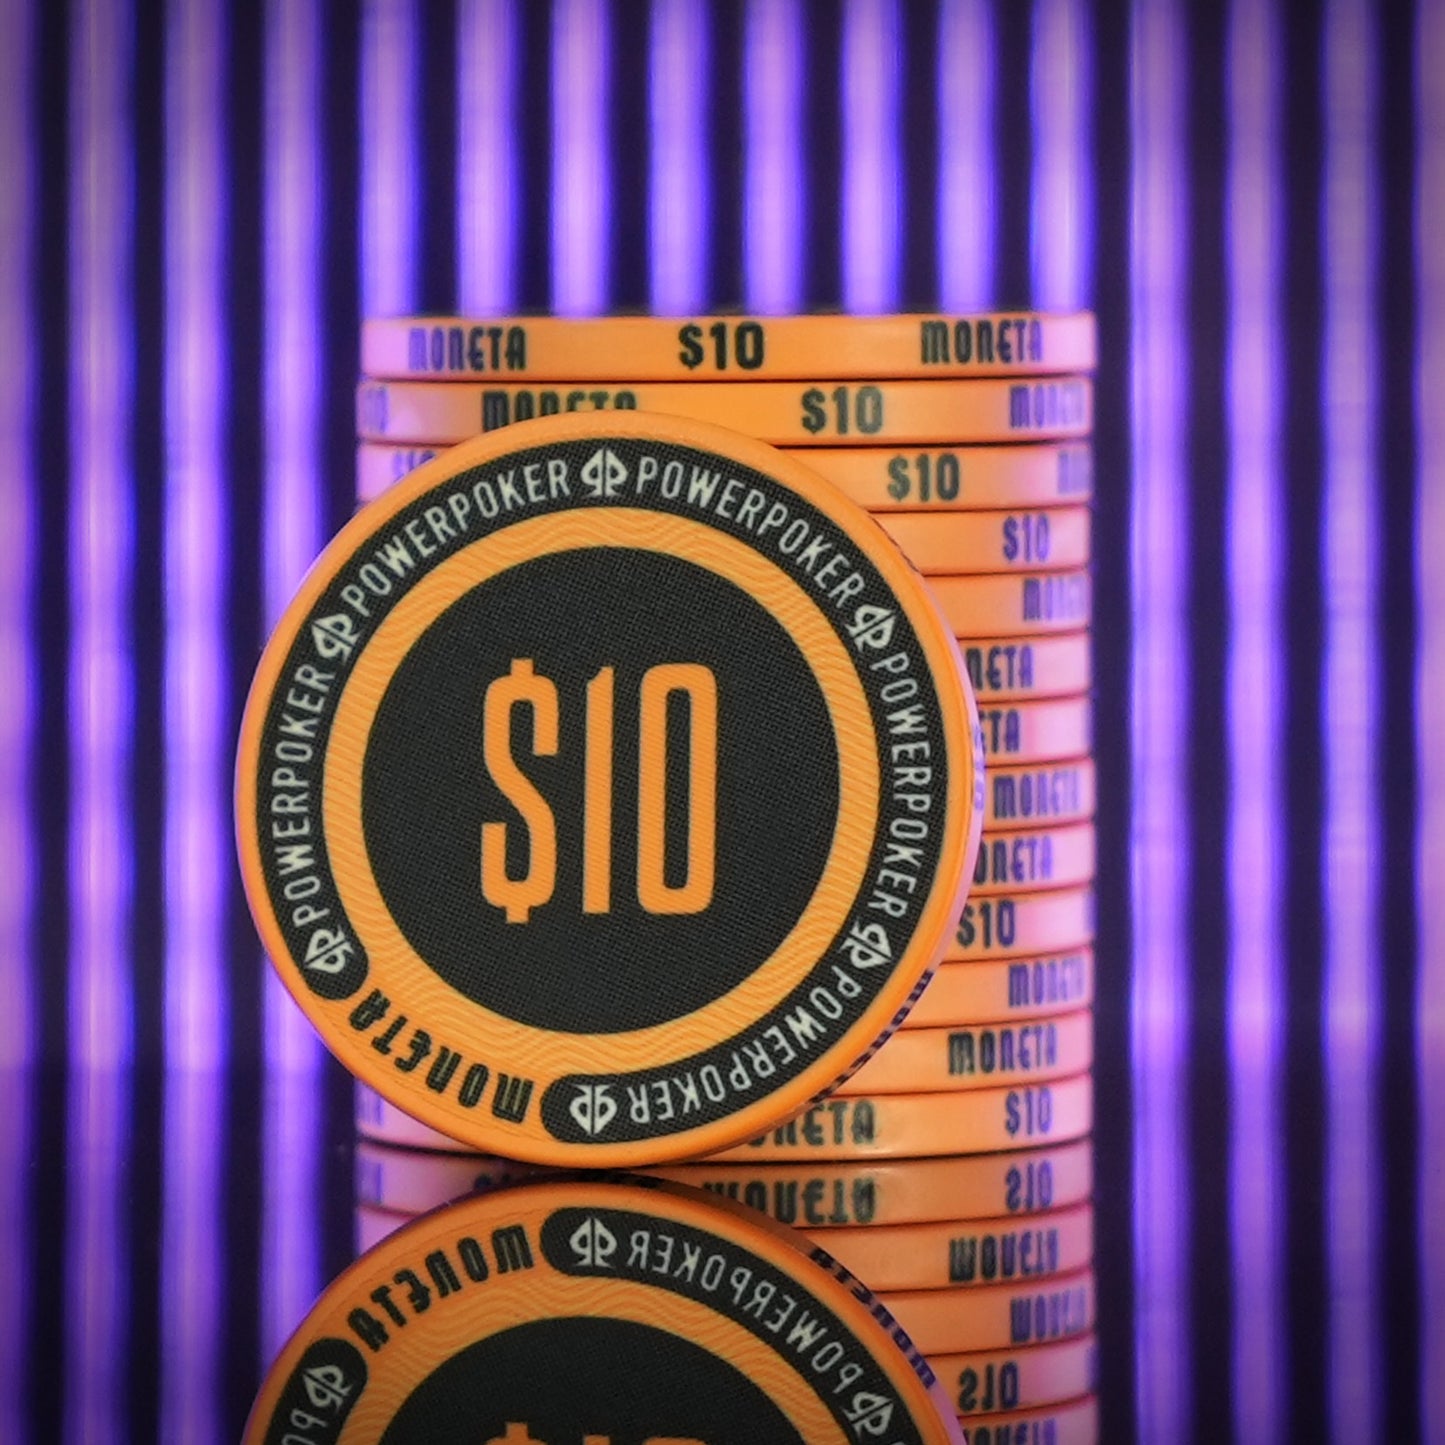 Moneta "Las Vegas" 1000 - Keramik Pokerchips (25 Stück)